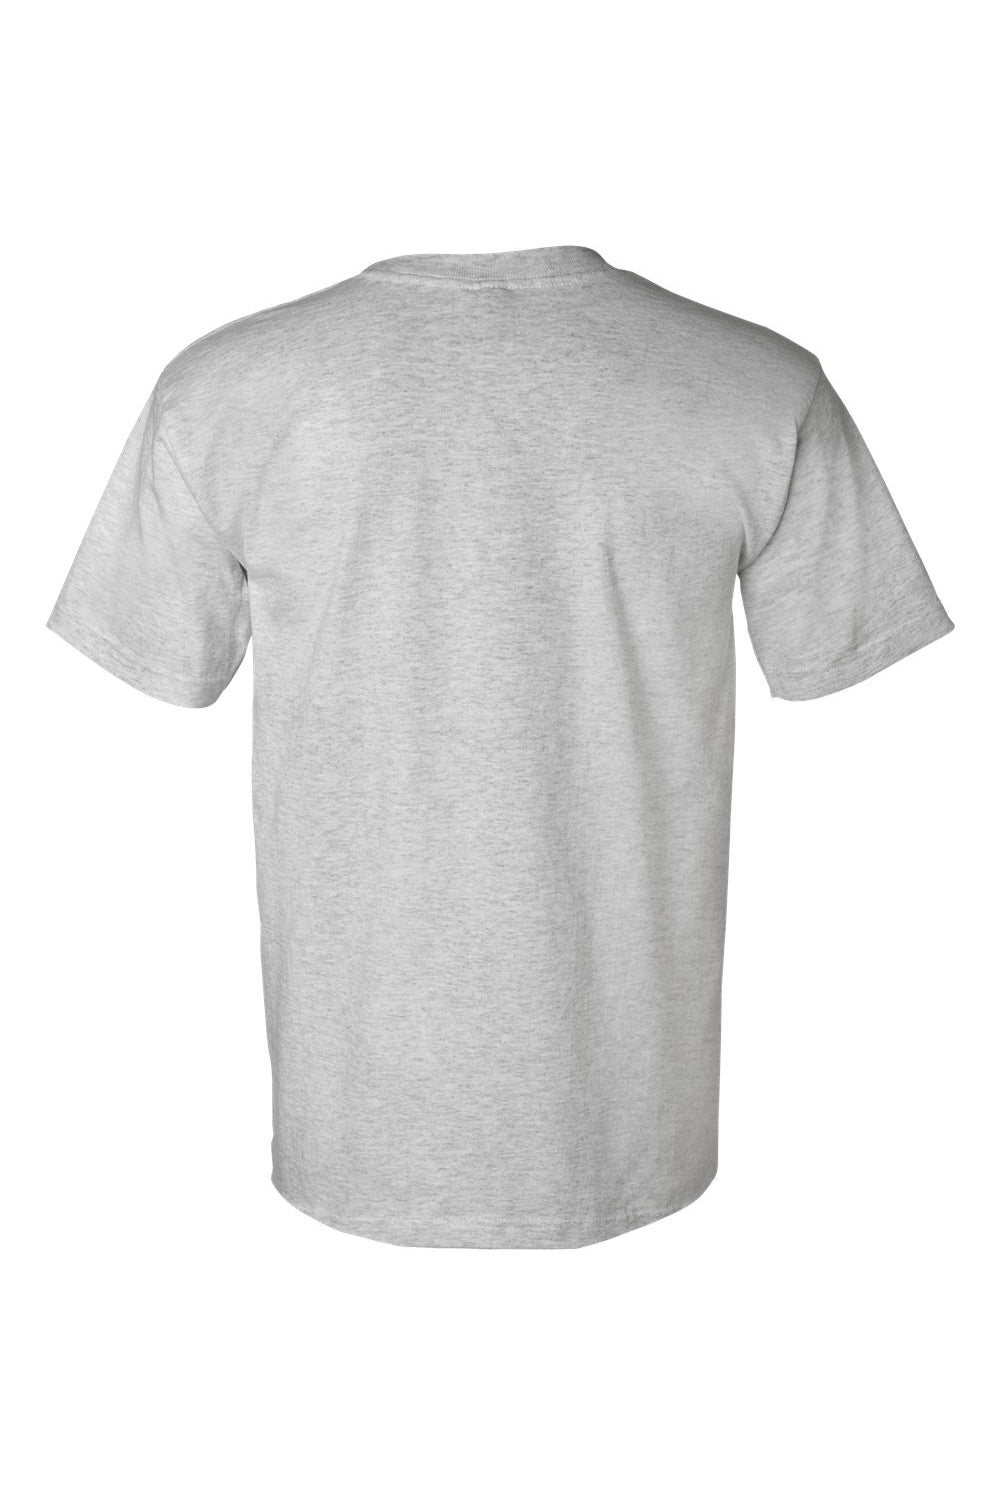 Bayside BA7100 Mens USA Made Short Sleeve Crewneck T-Shirt w/ Pocket Dark Ash Grey Flat Back